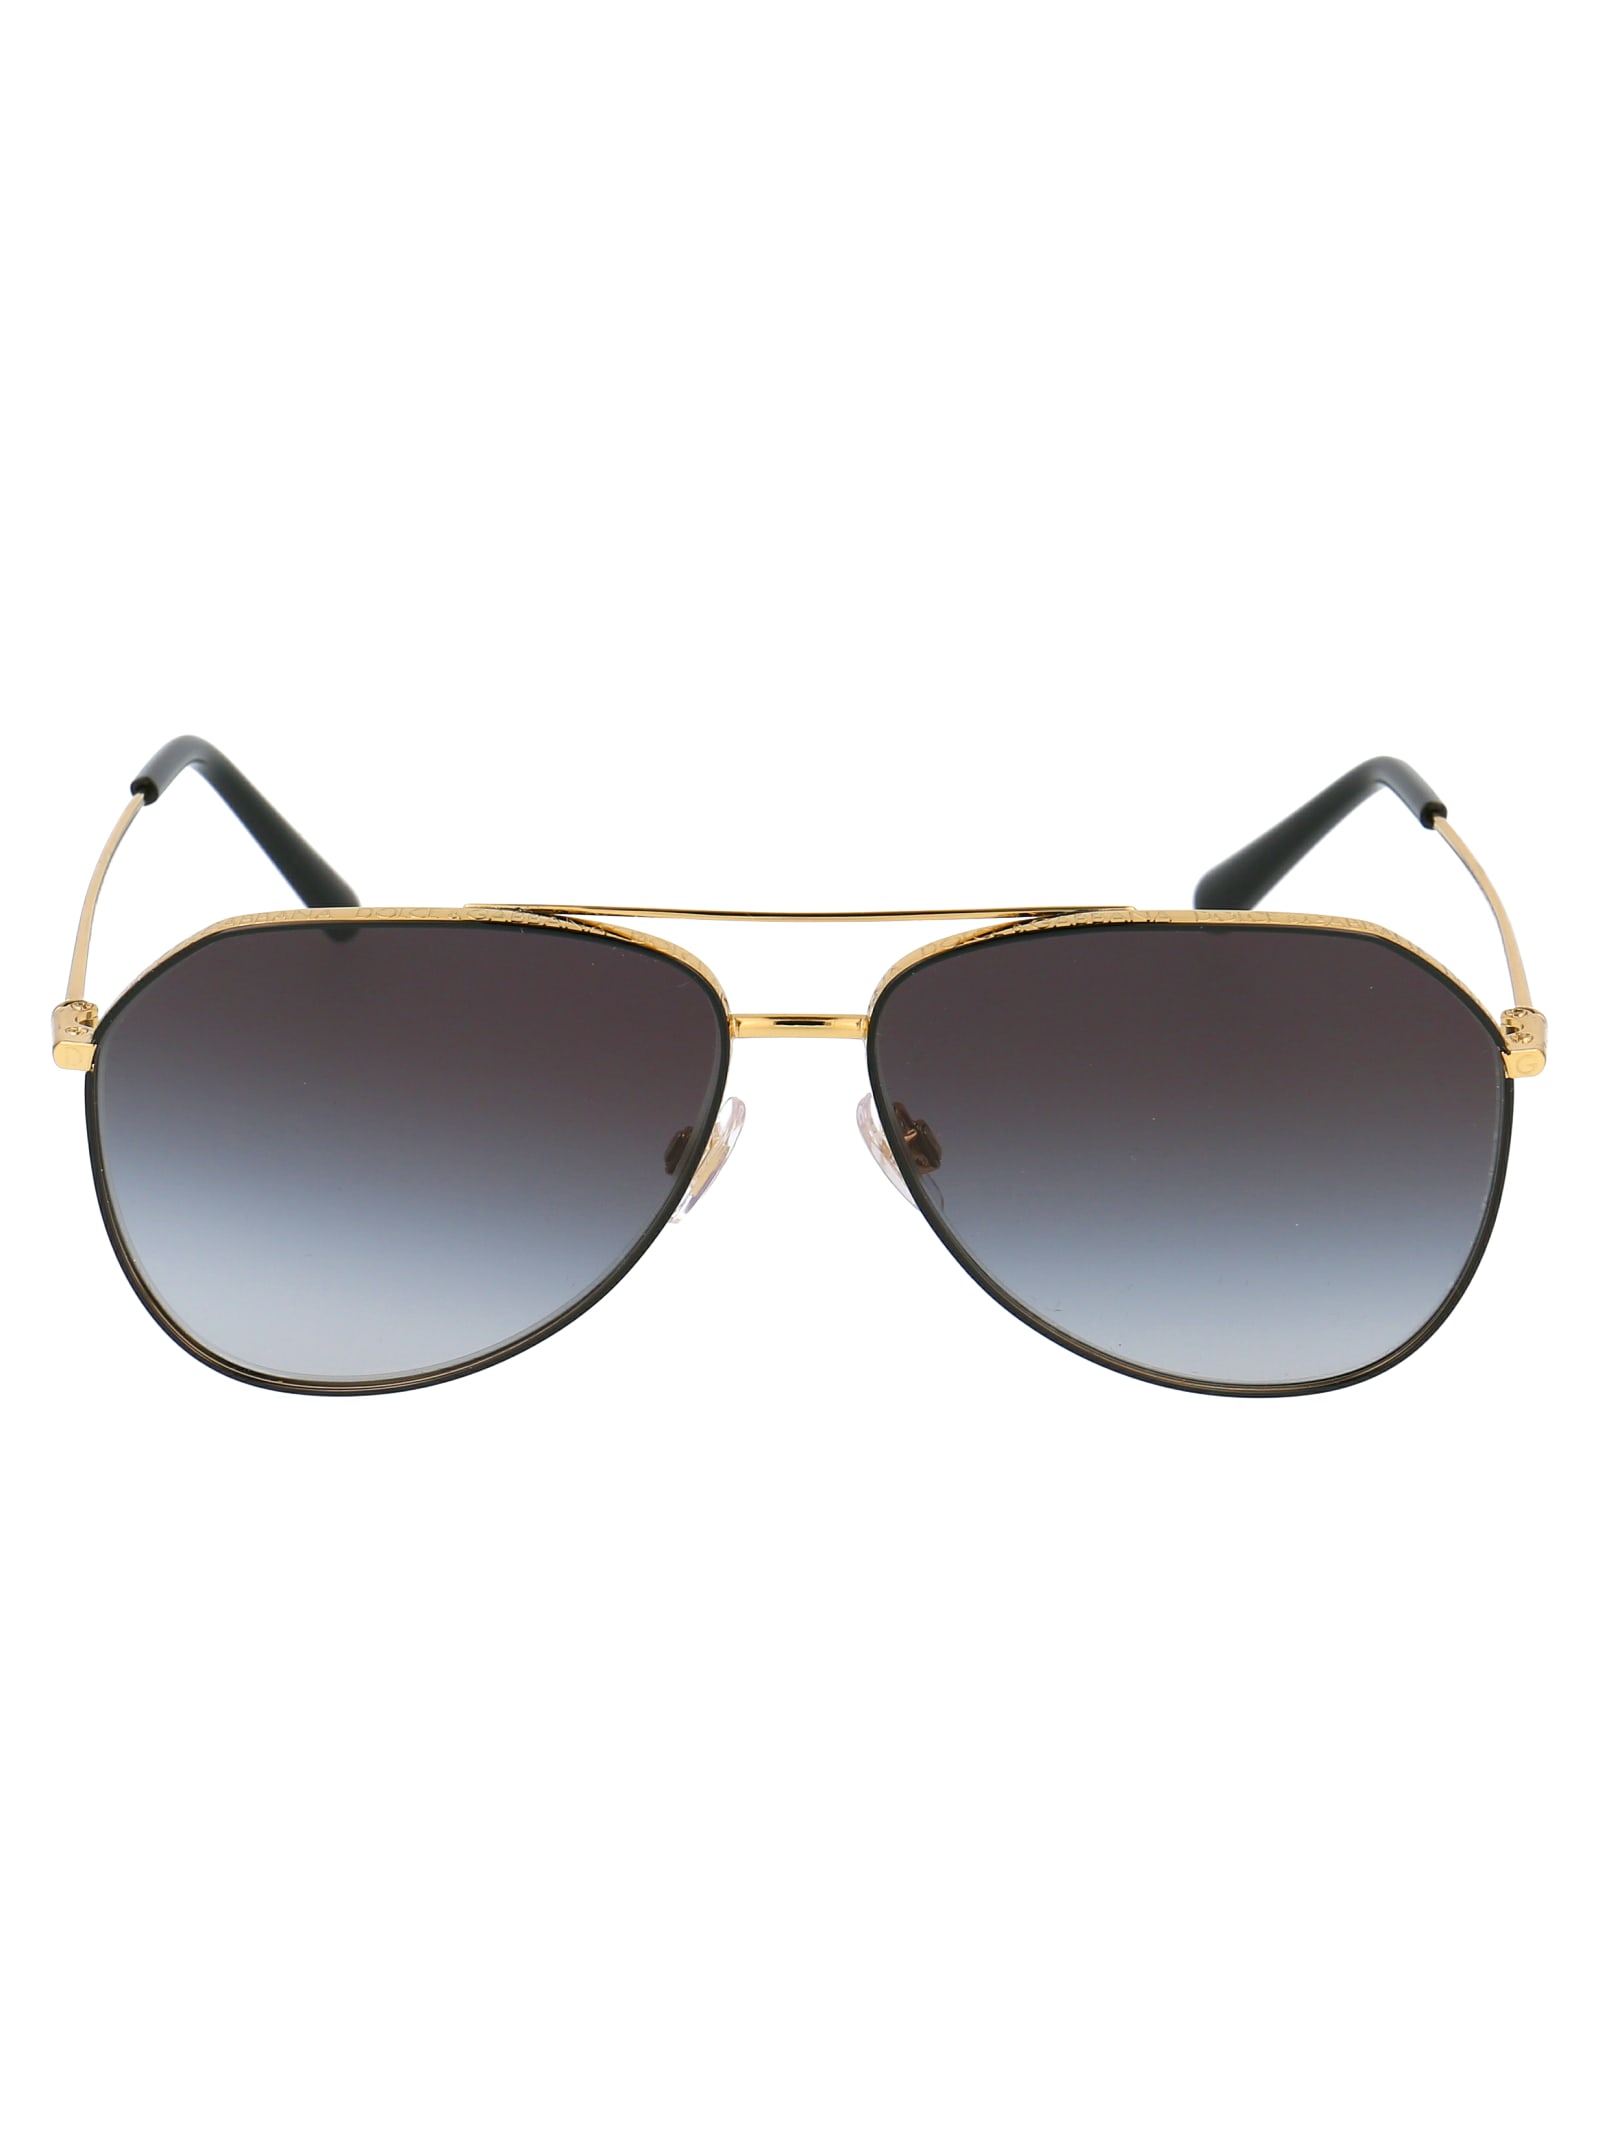 Dolce & Gabbana Eyewear 0dg2244 Sunglasses